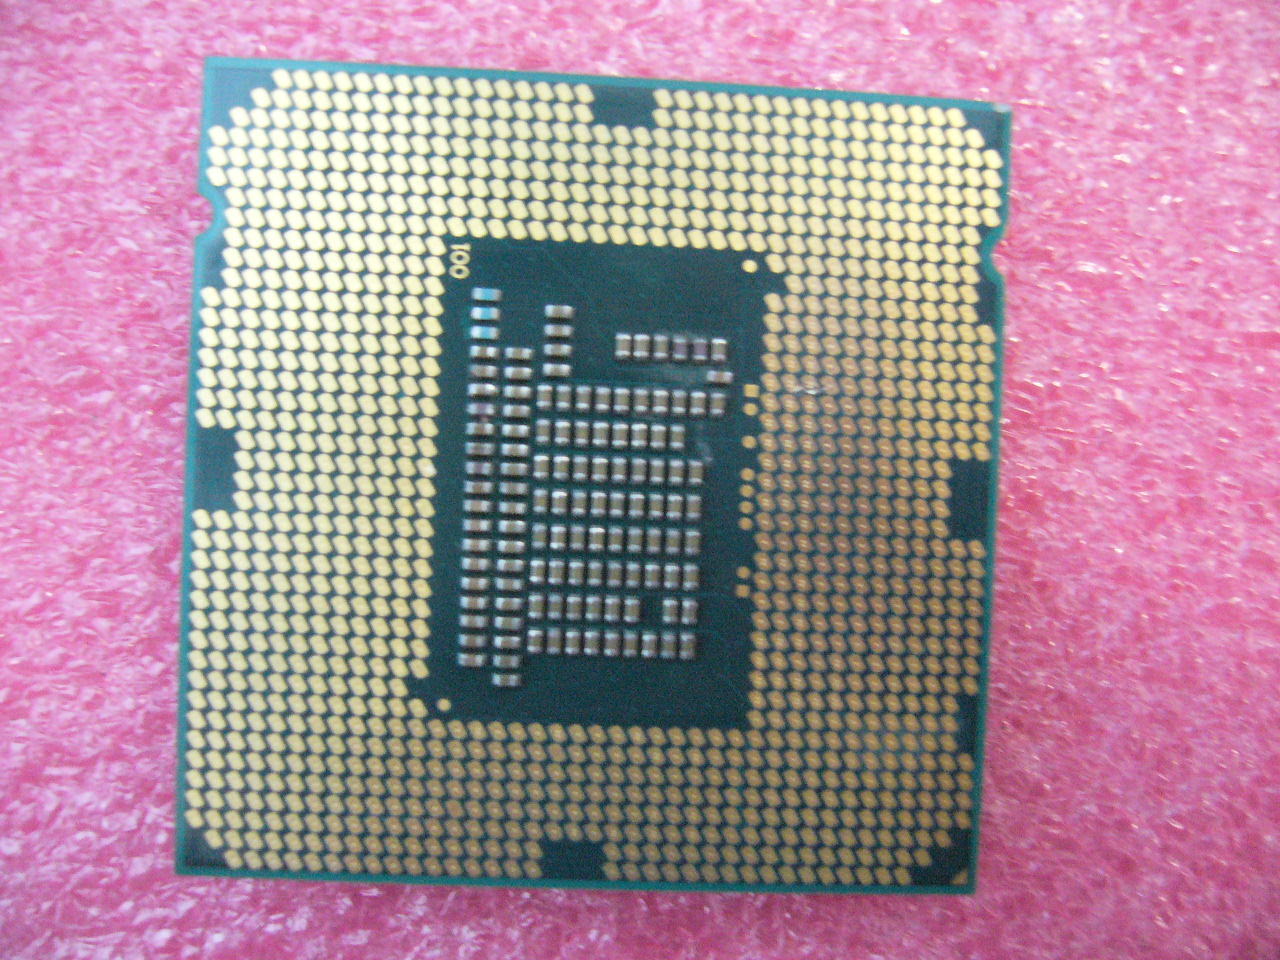 QTY 1x INTEL Pentium CPU G2030T 2.6GHZ/3MB LGA1155 SR164 TDP 35W - Click Image to Close